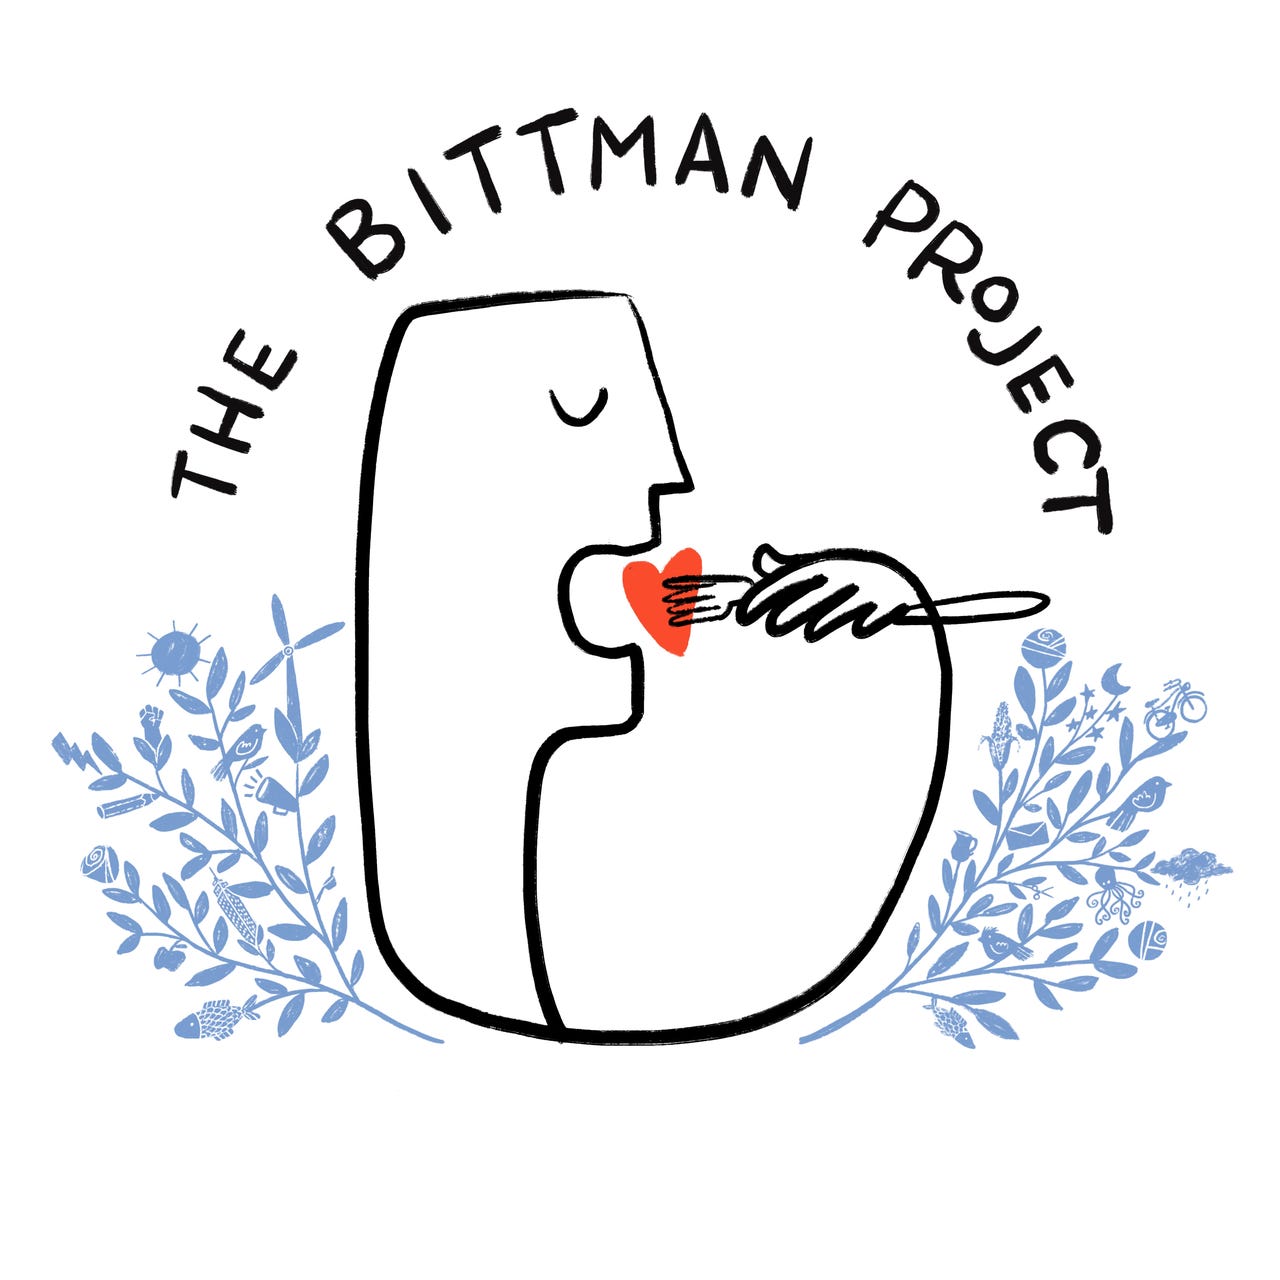 The Bittman Project